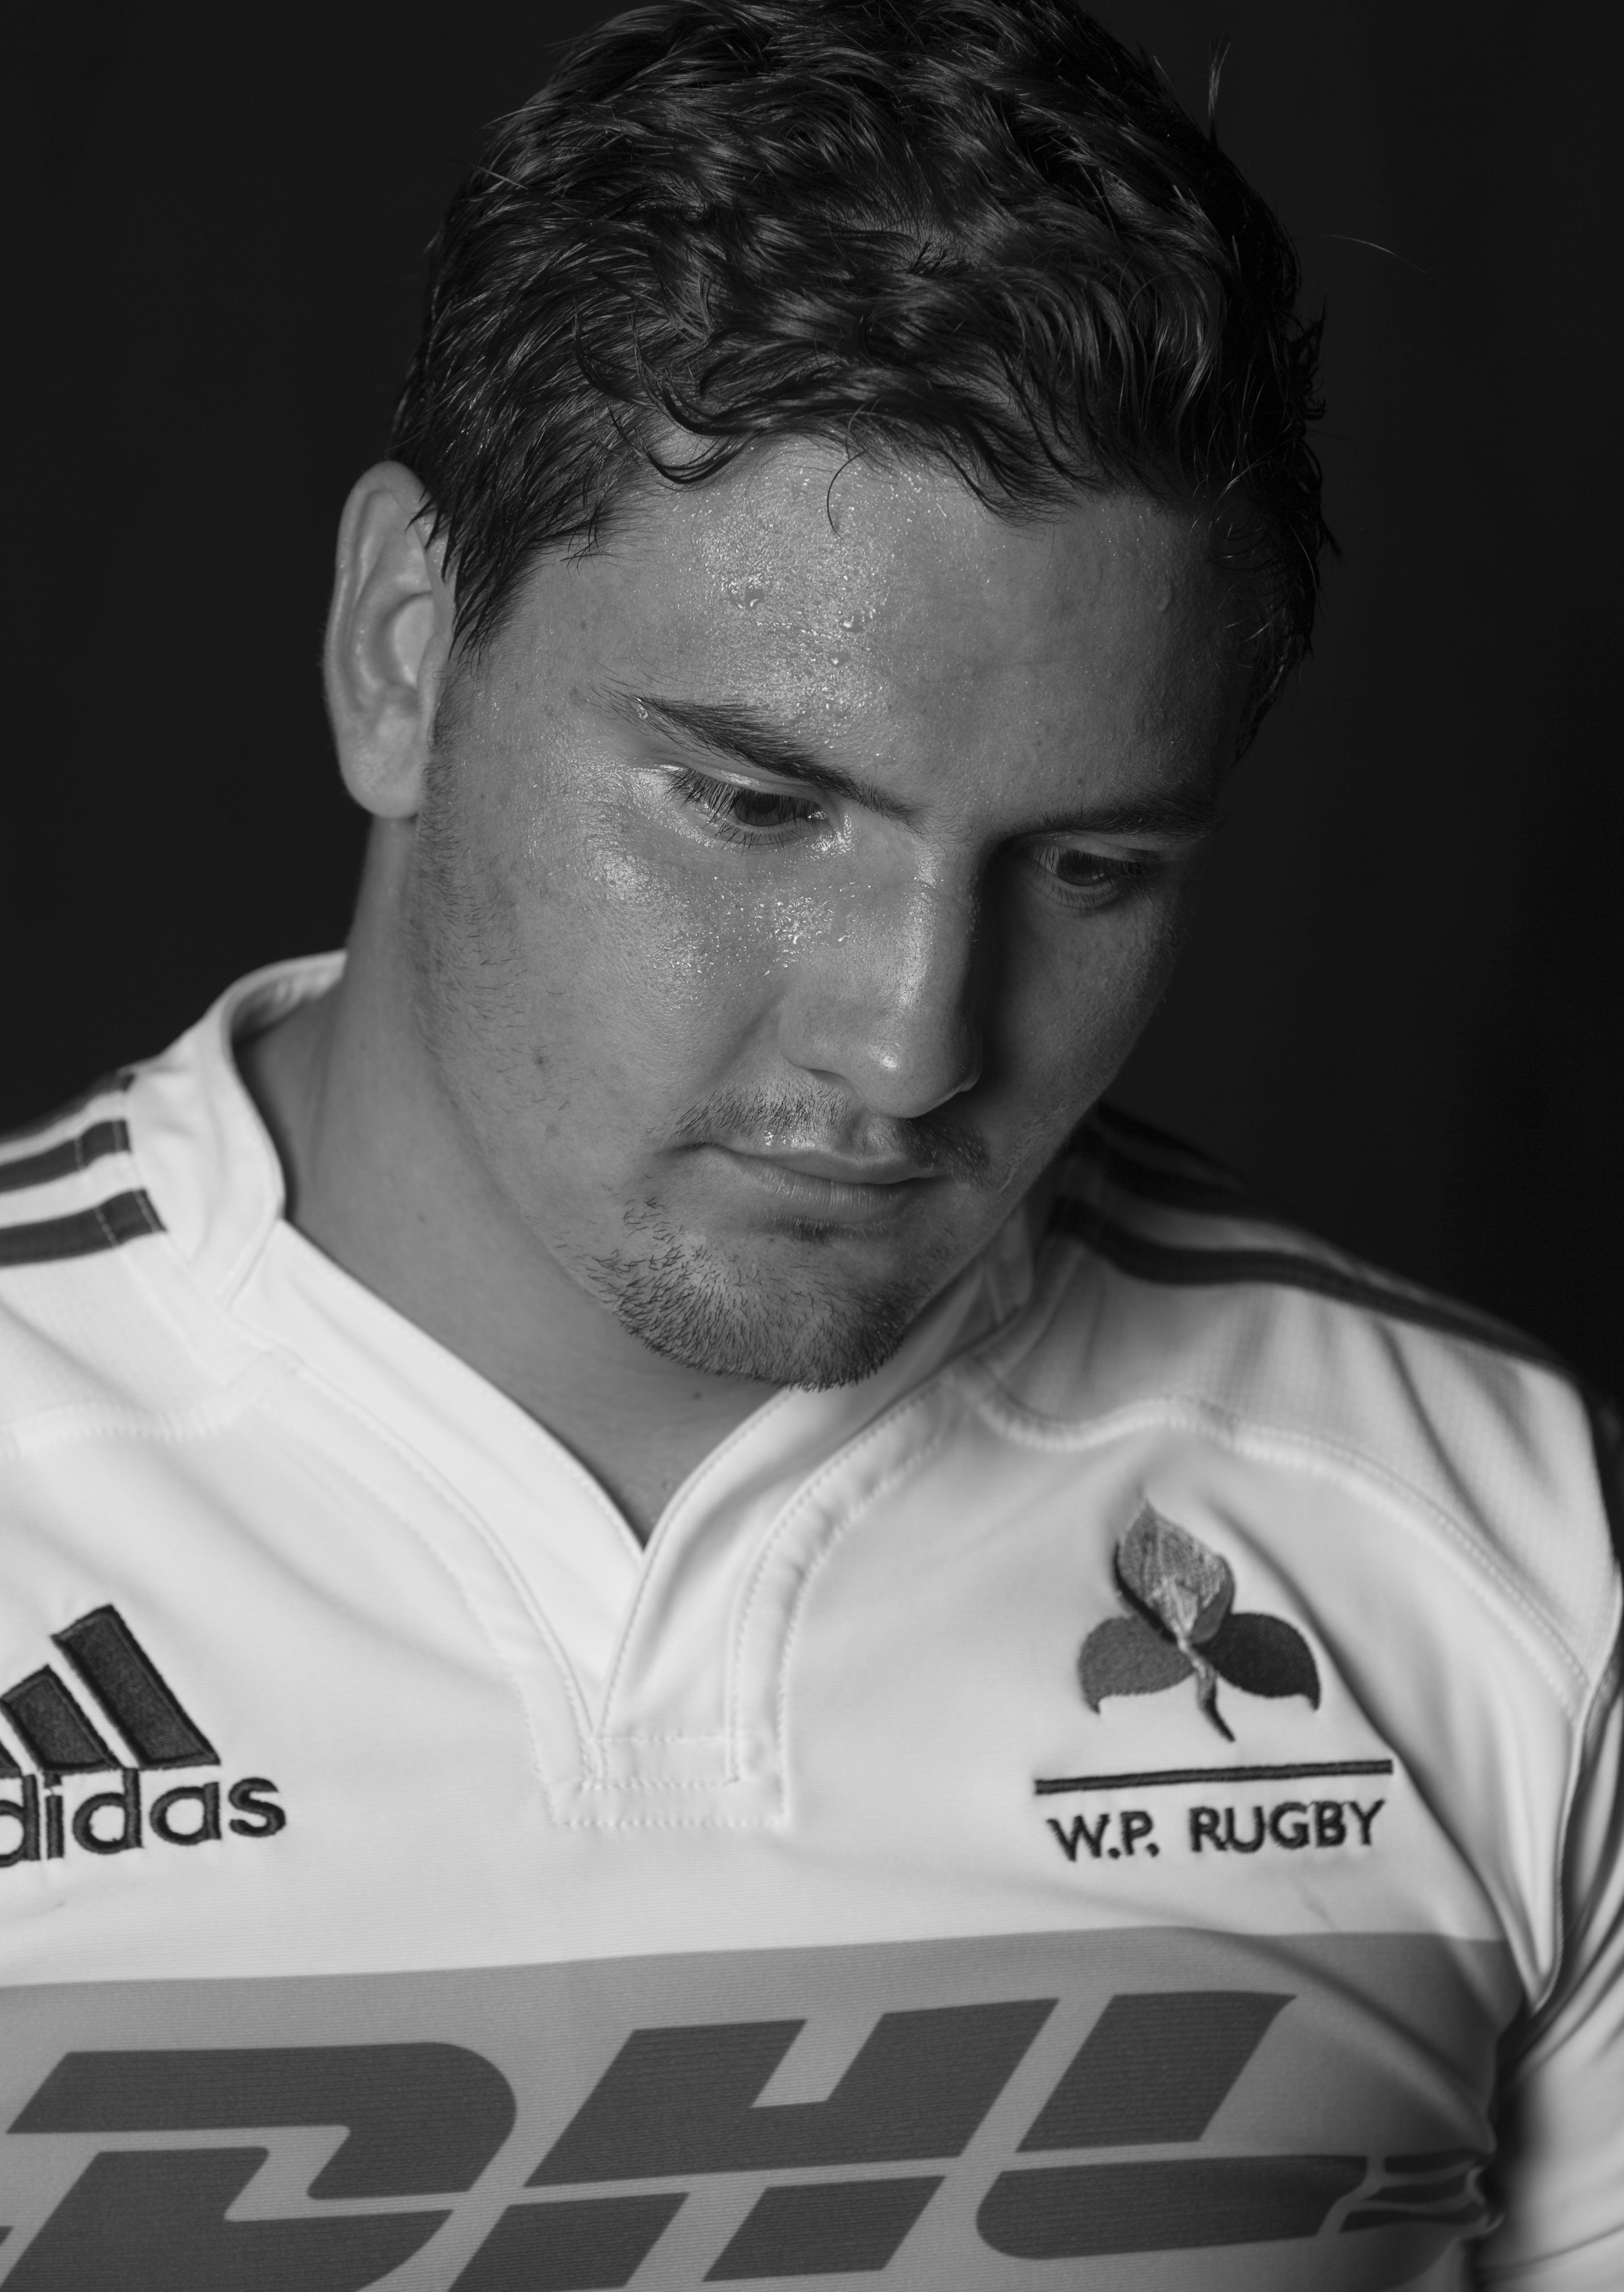 SA rugby 1 - Andreas Baum